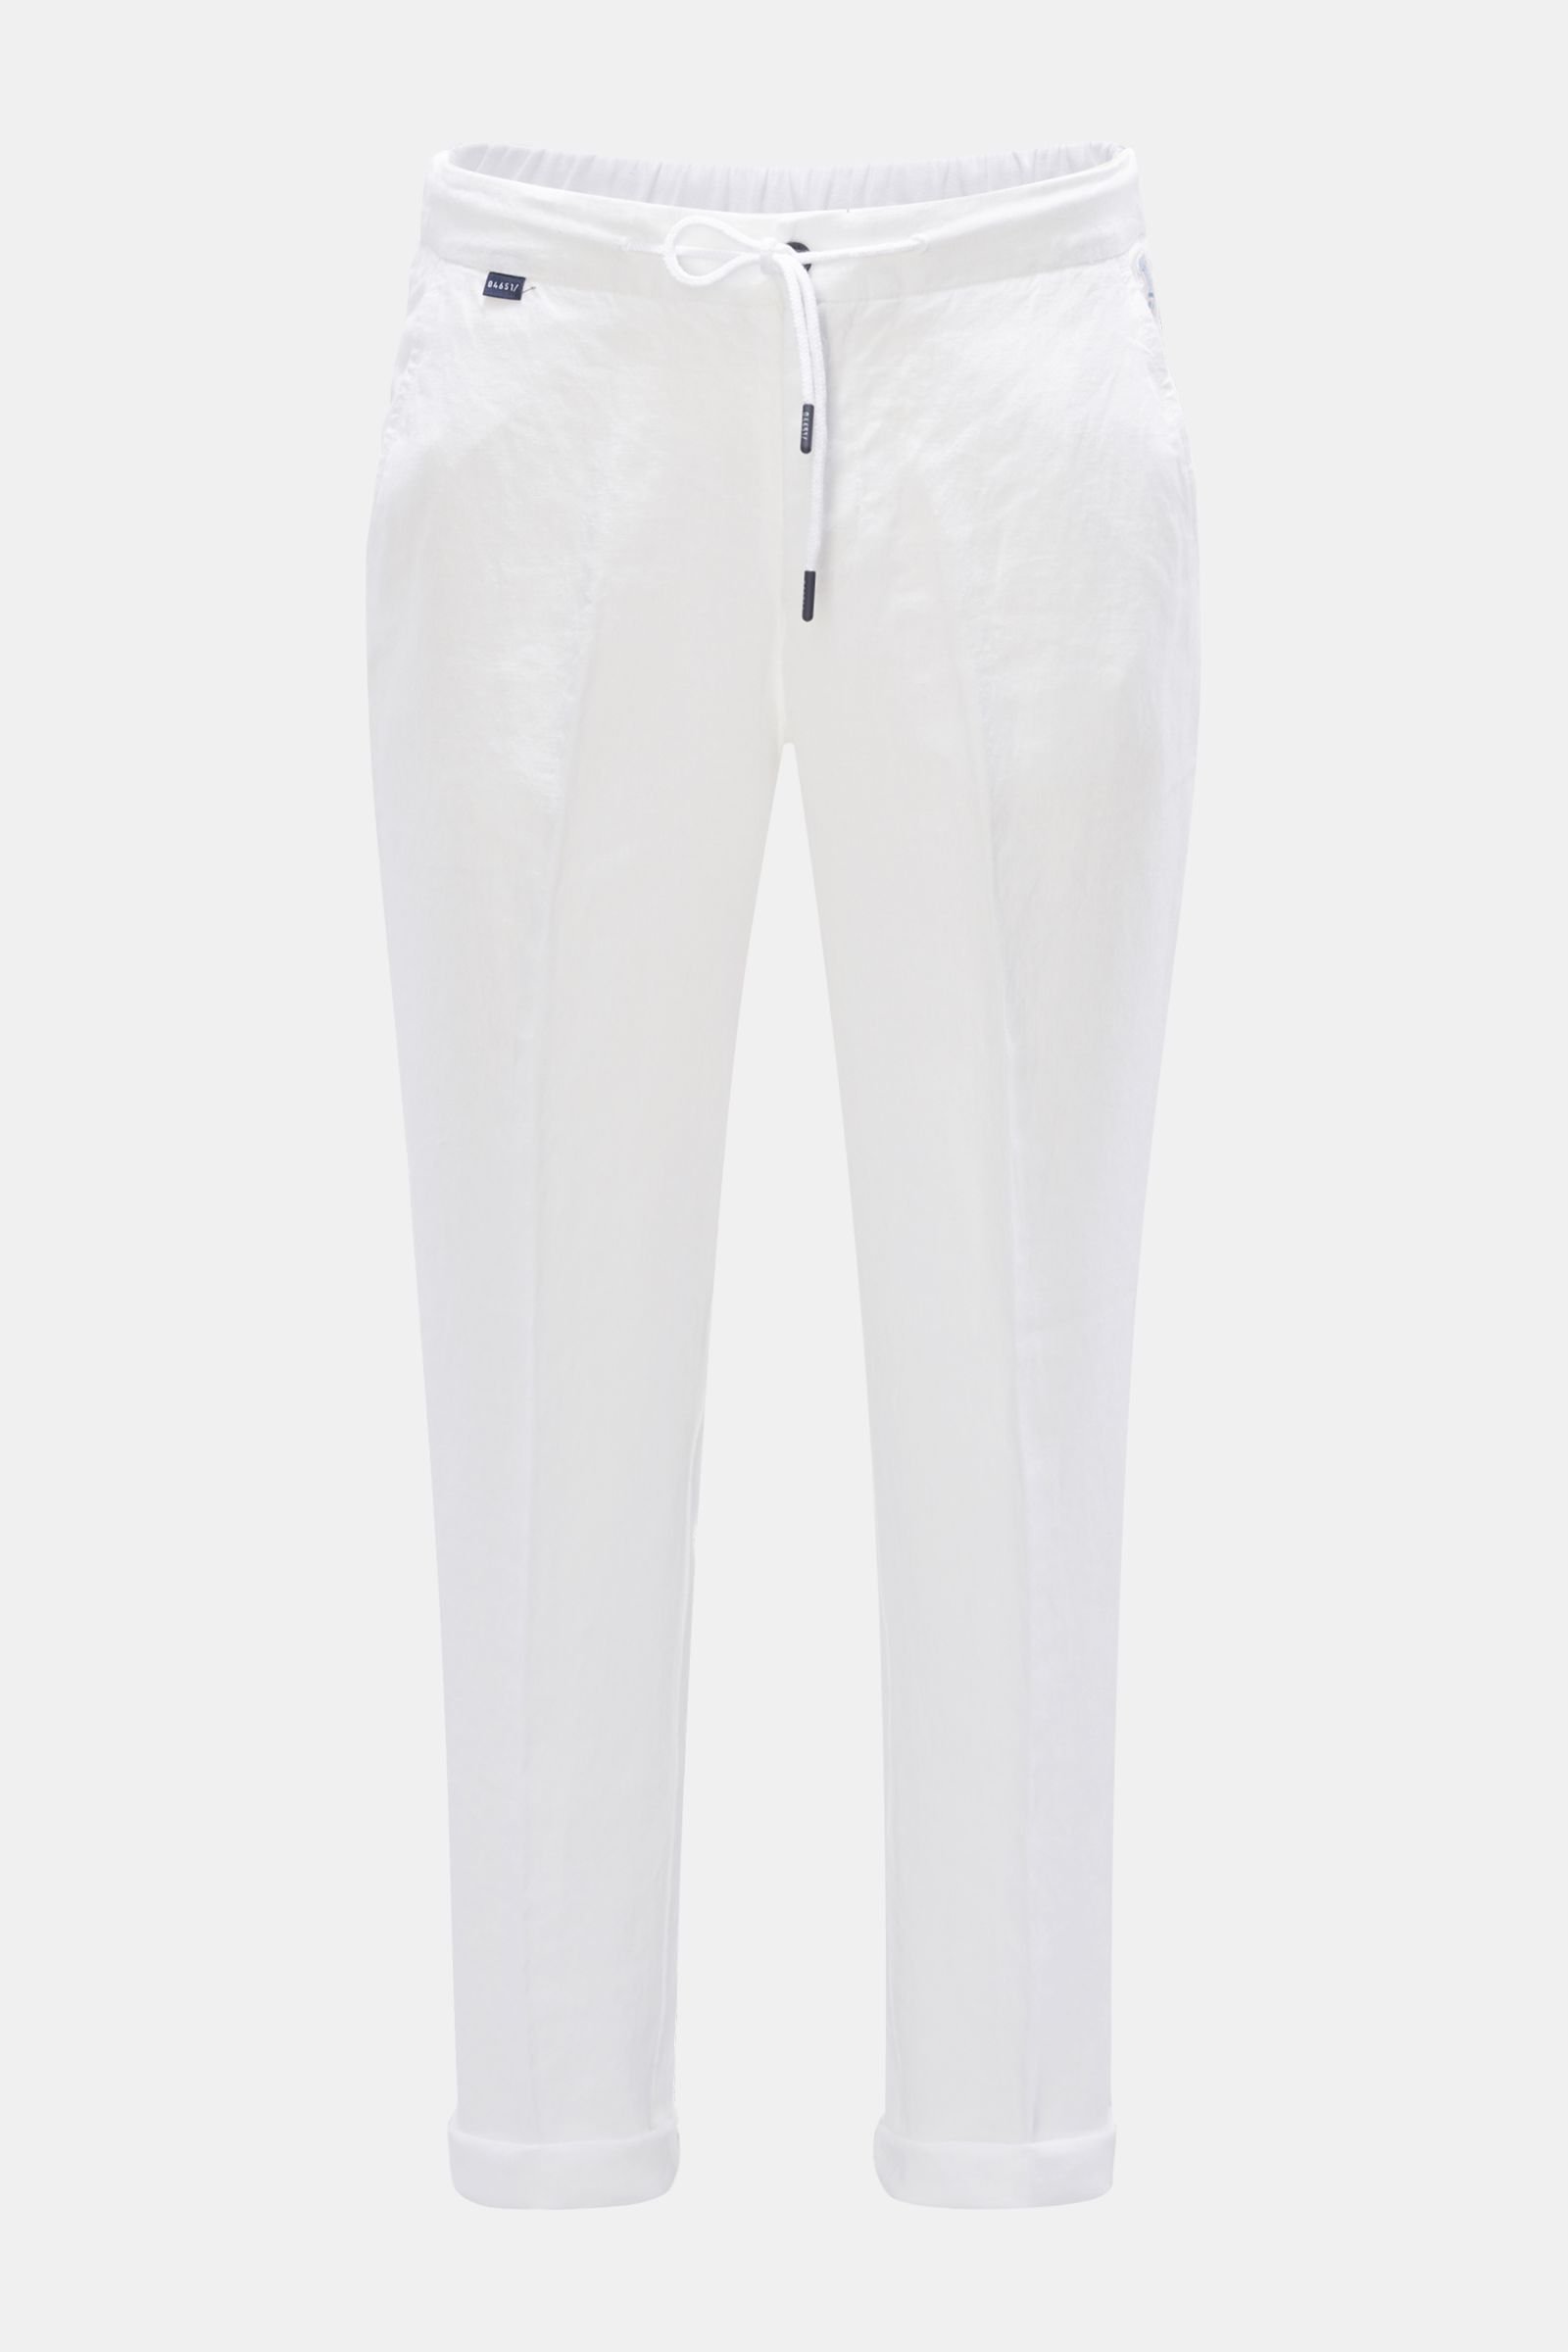 Linen jogger pants white